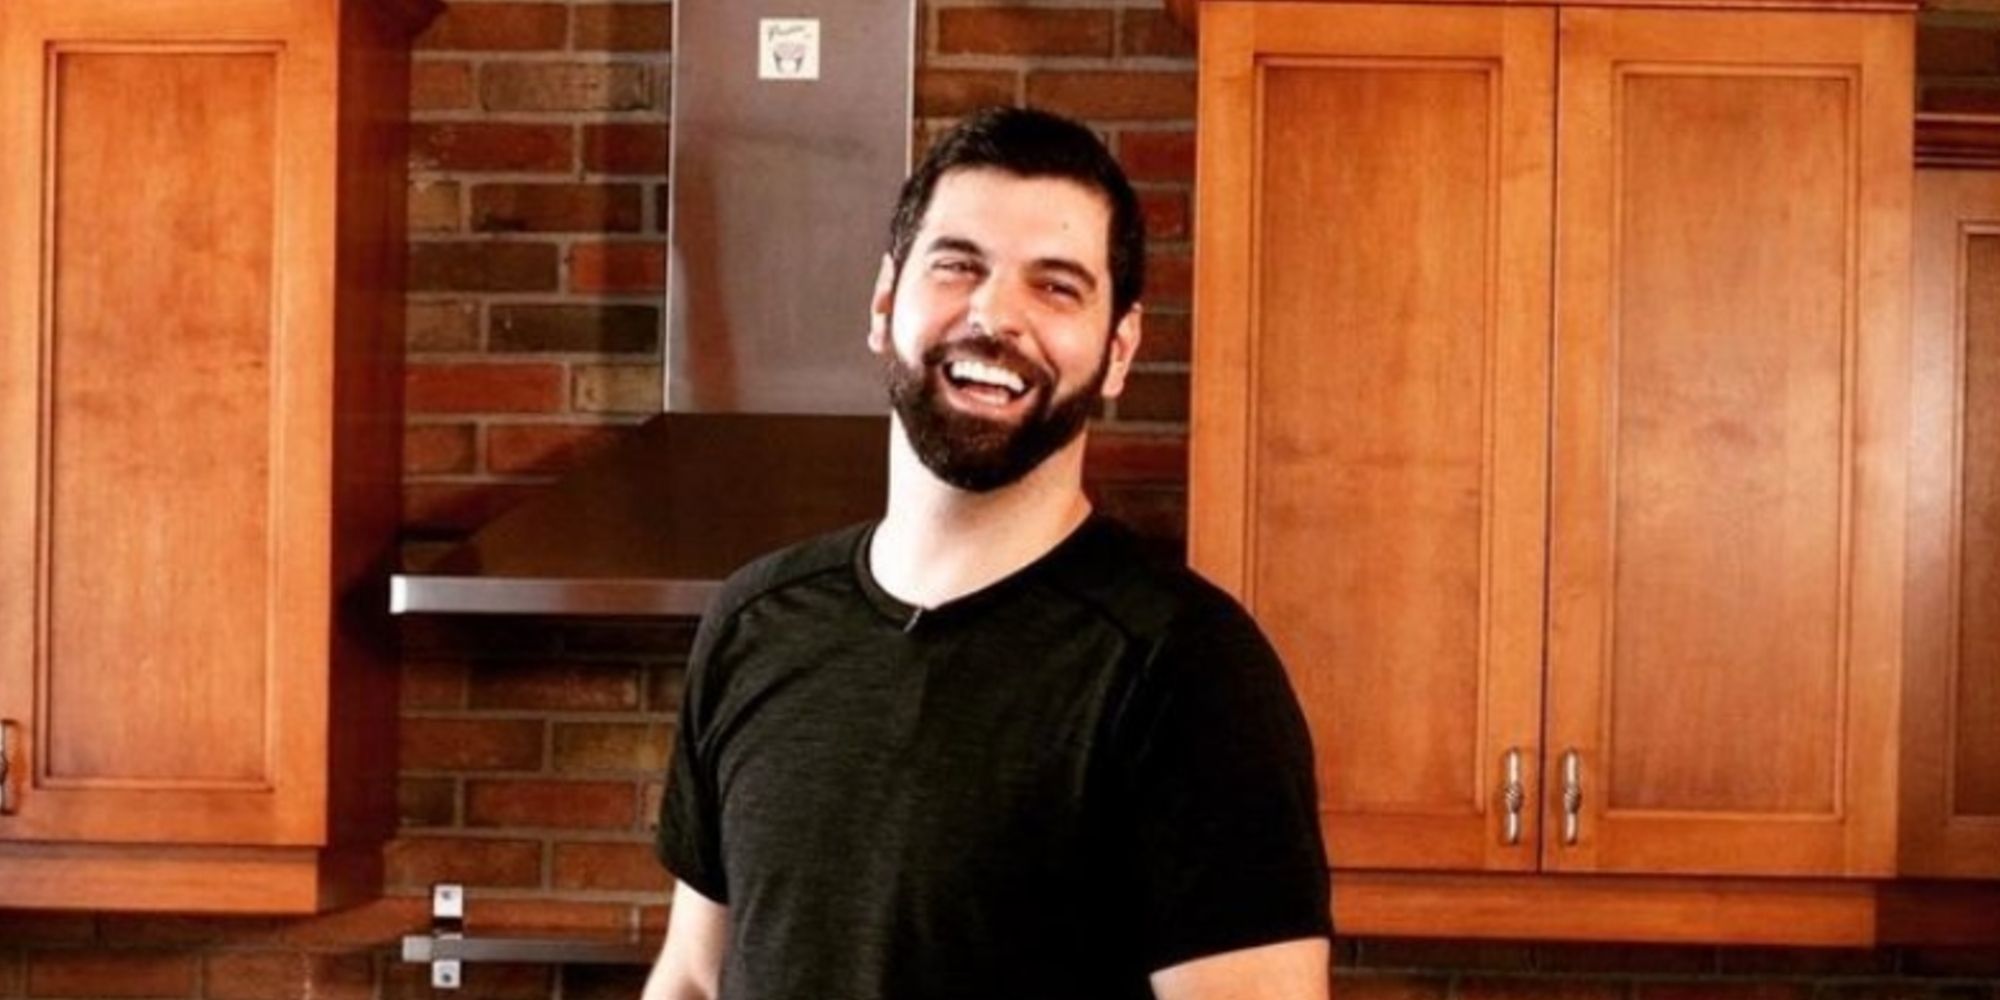 Chef Matt Burns from Below Deck in black tee shirt, laughing, standing in a kitchen